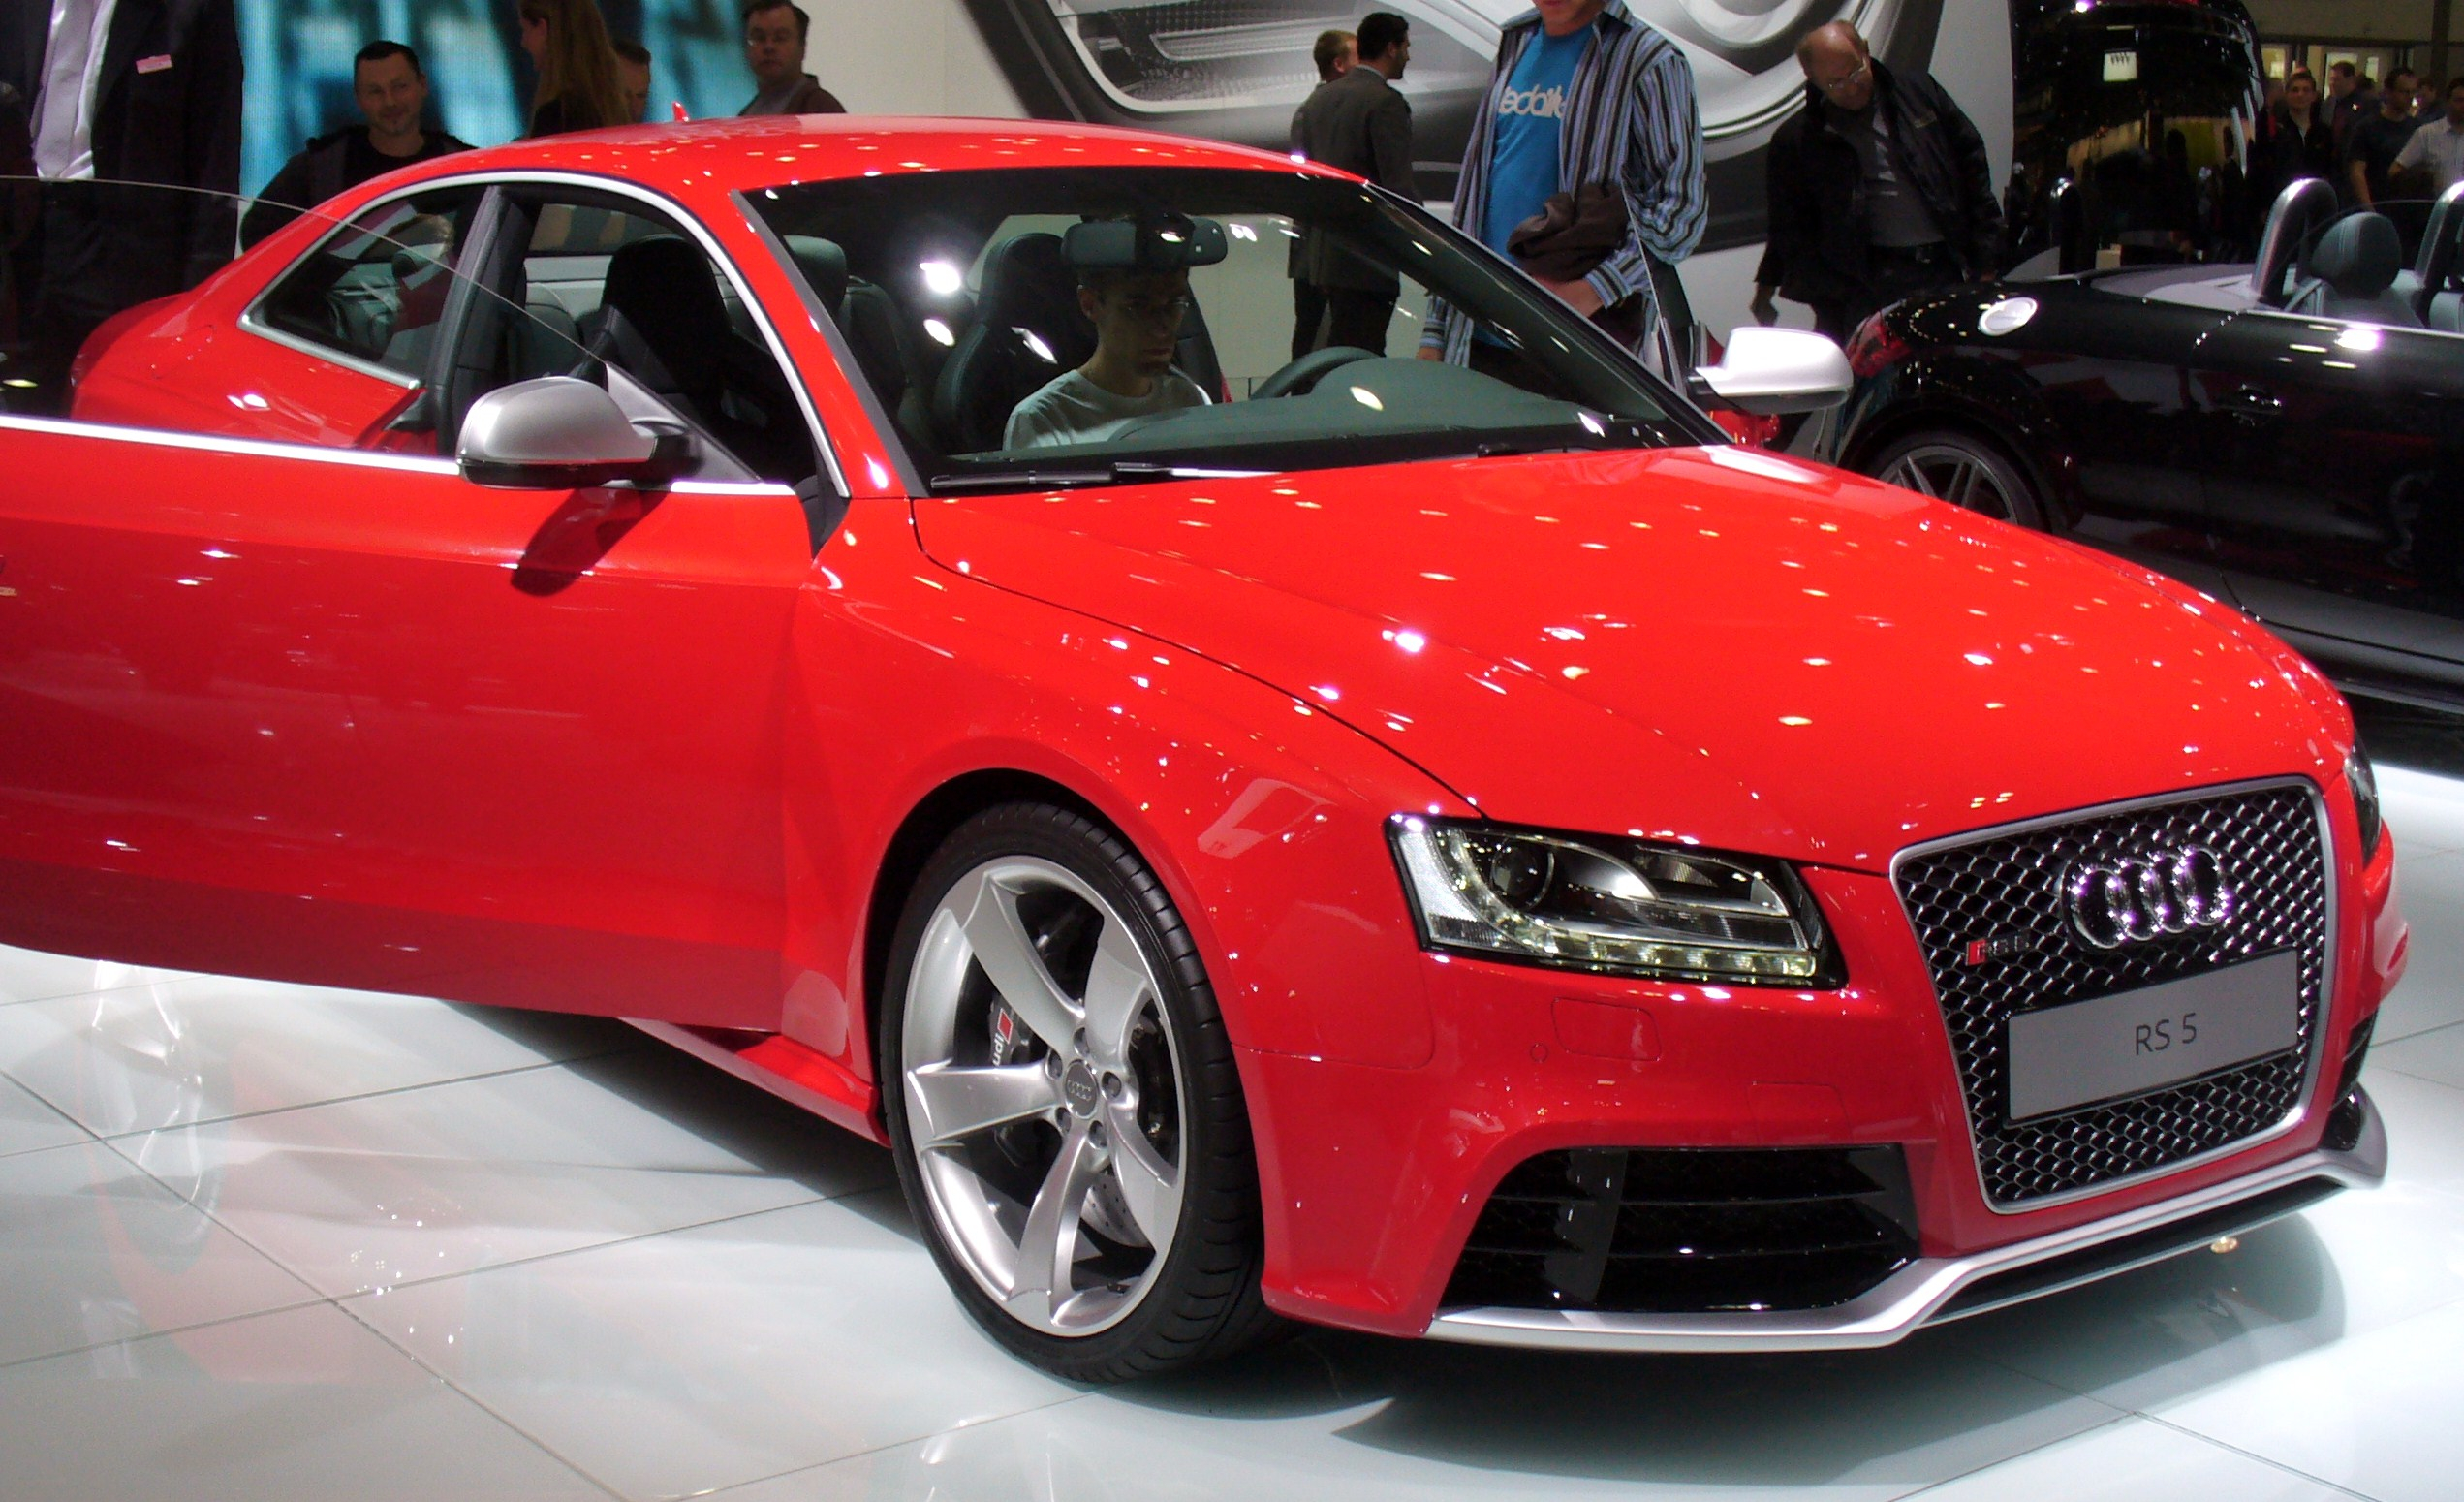 Ауди майот. Audi rs5 2010. Audi rs5 Red. Audi rs5 Coupe. Ауди rs5 купе красная.